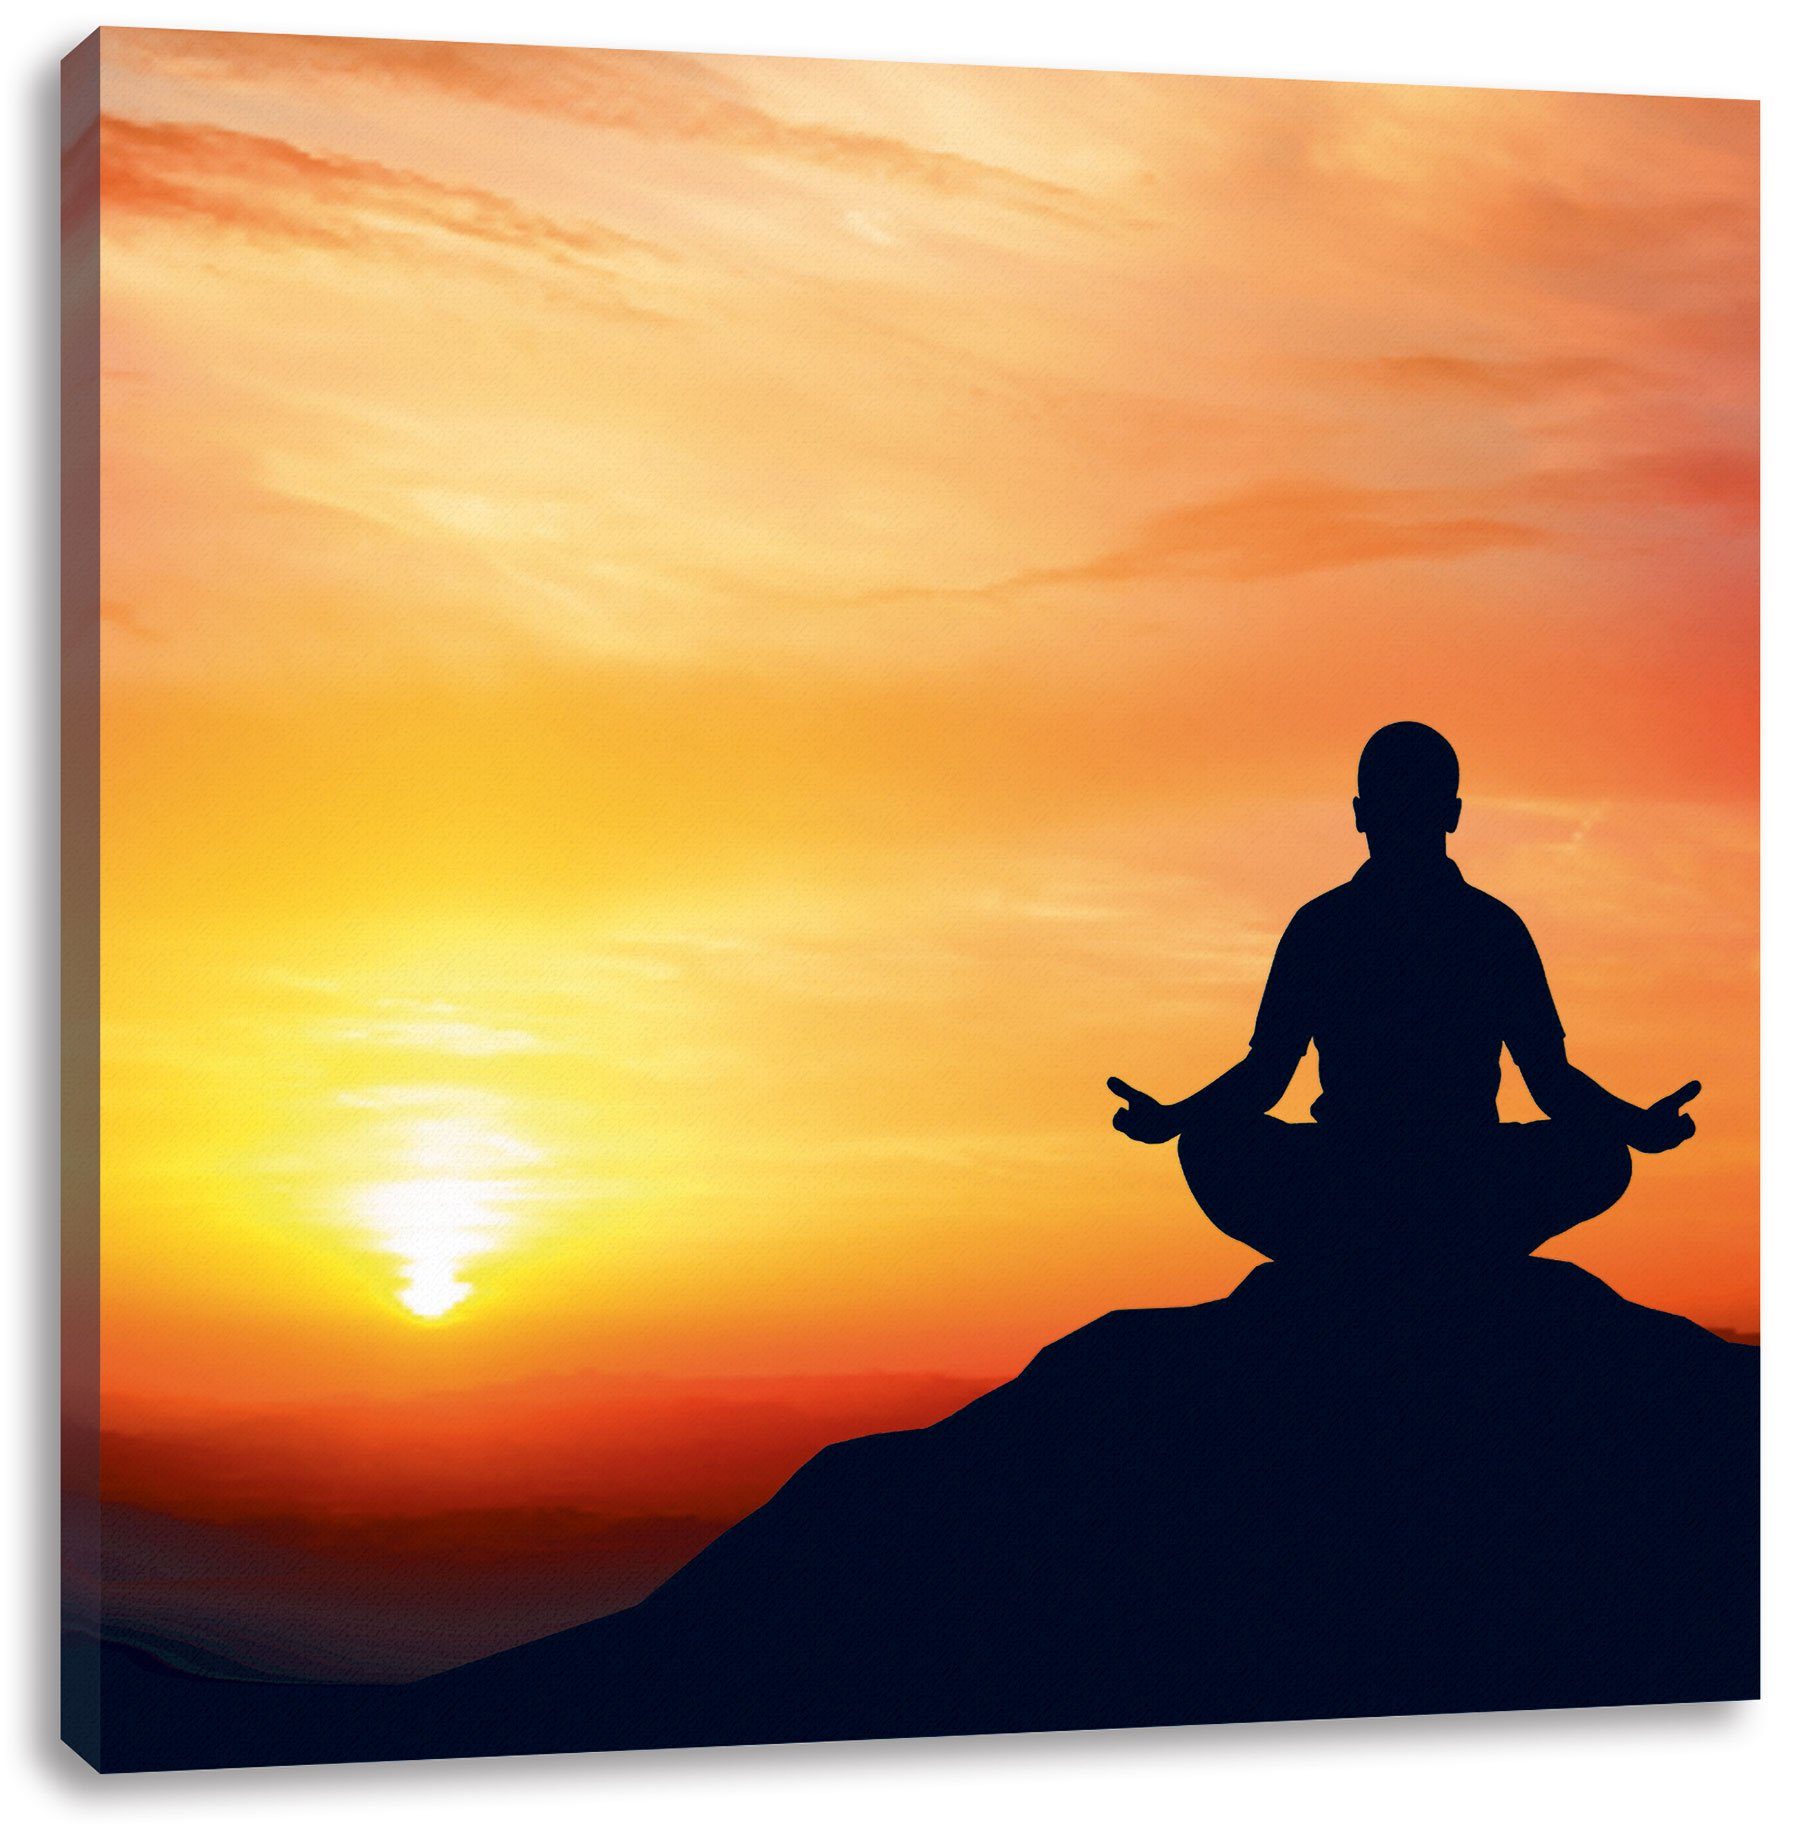 Diese Woche beliebt Pixxprint Leinwandbild im im Sonnenuntergang, Meditation fertig Sonnenuntergang Meditation (1 Leinwandbild bespannt, Zackenaufhänger inkl. St)